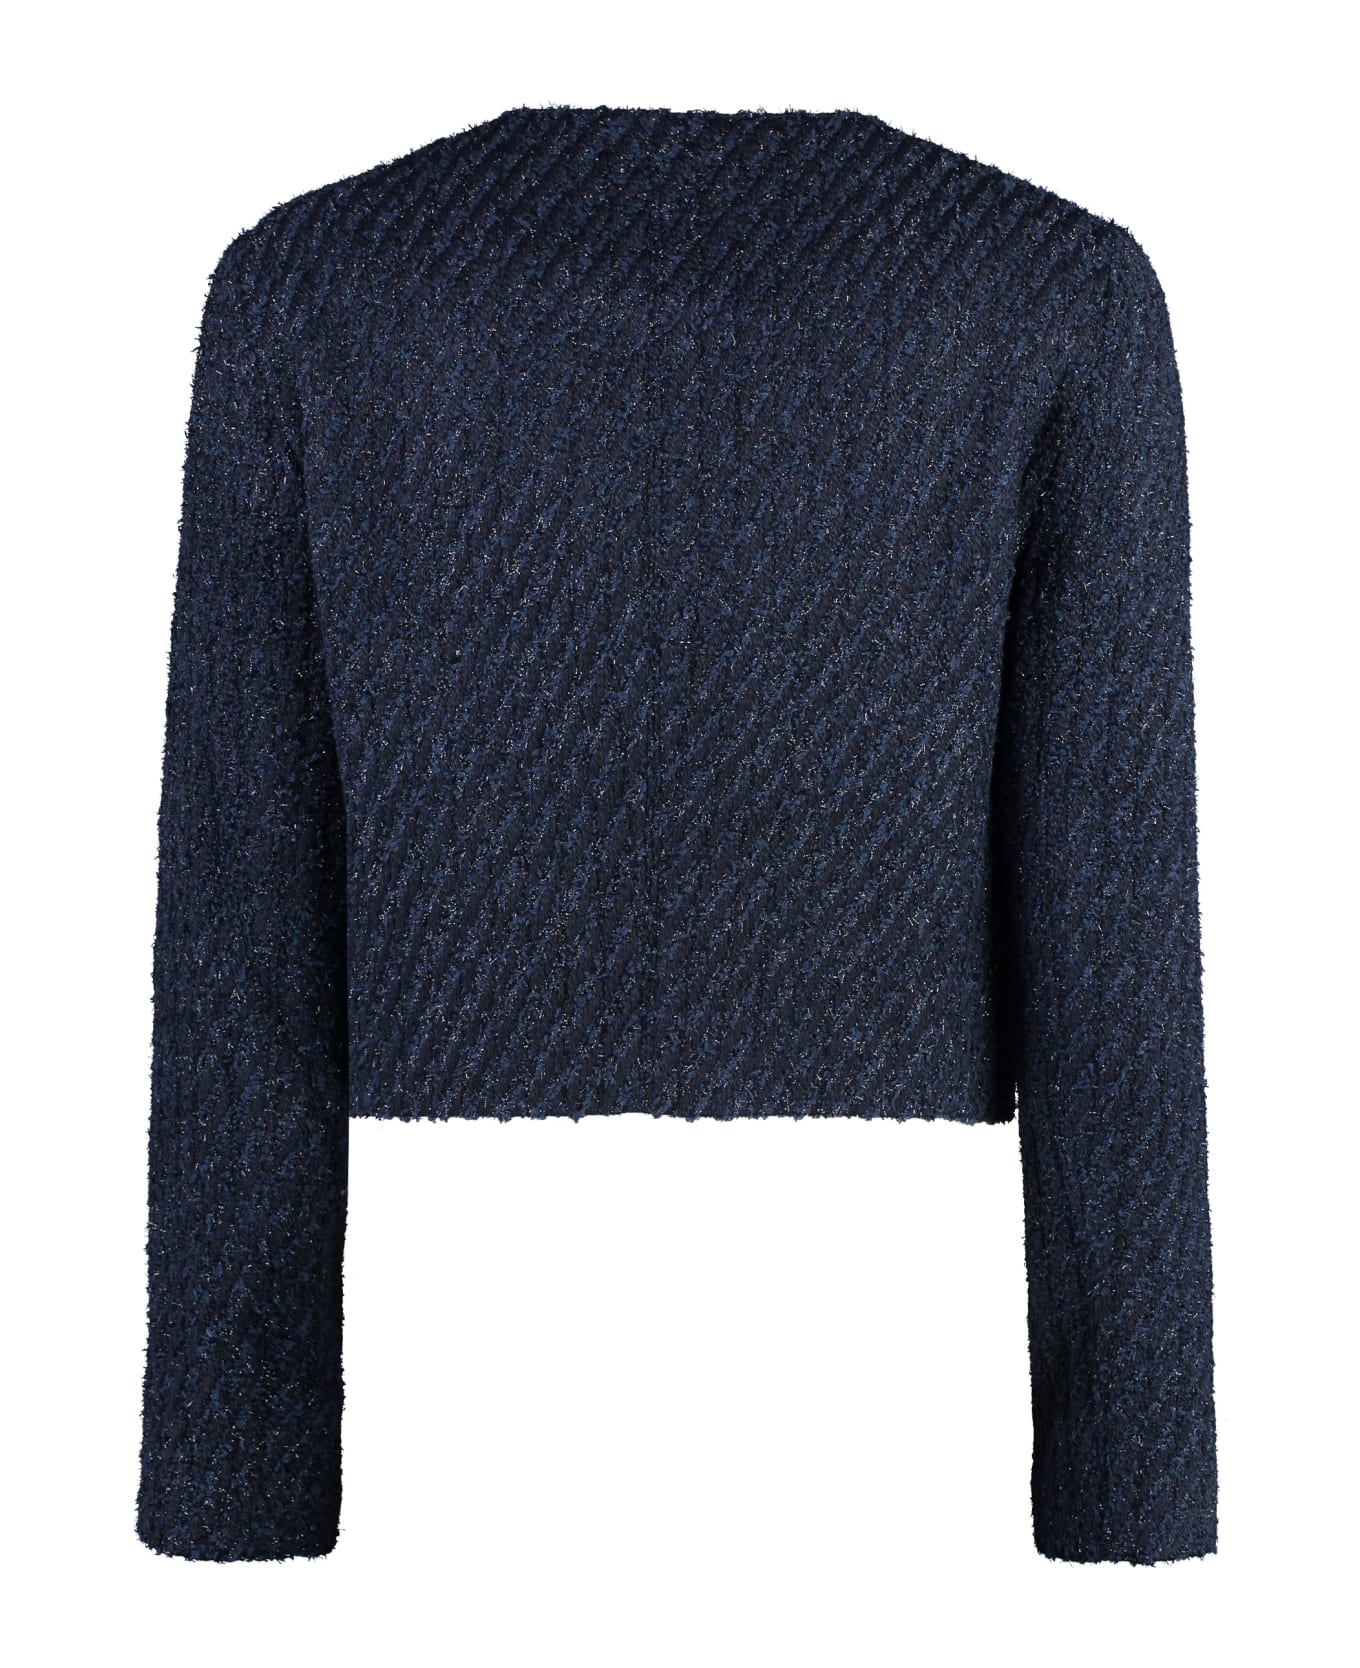 MICHAEL Michael Kors Knitted Jacket - blue カーディガン